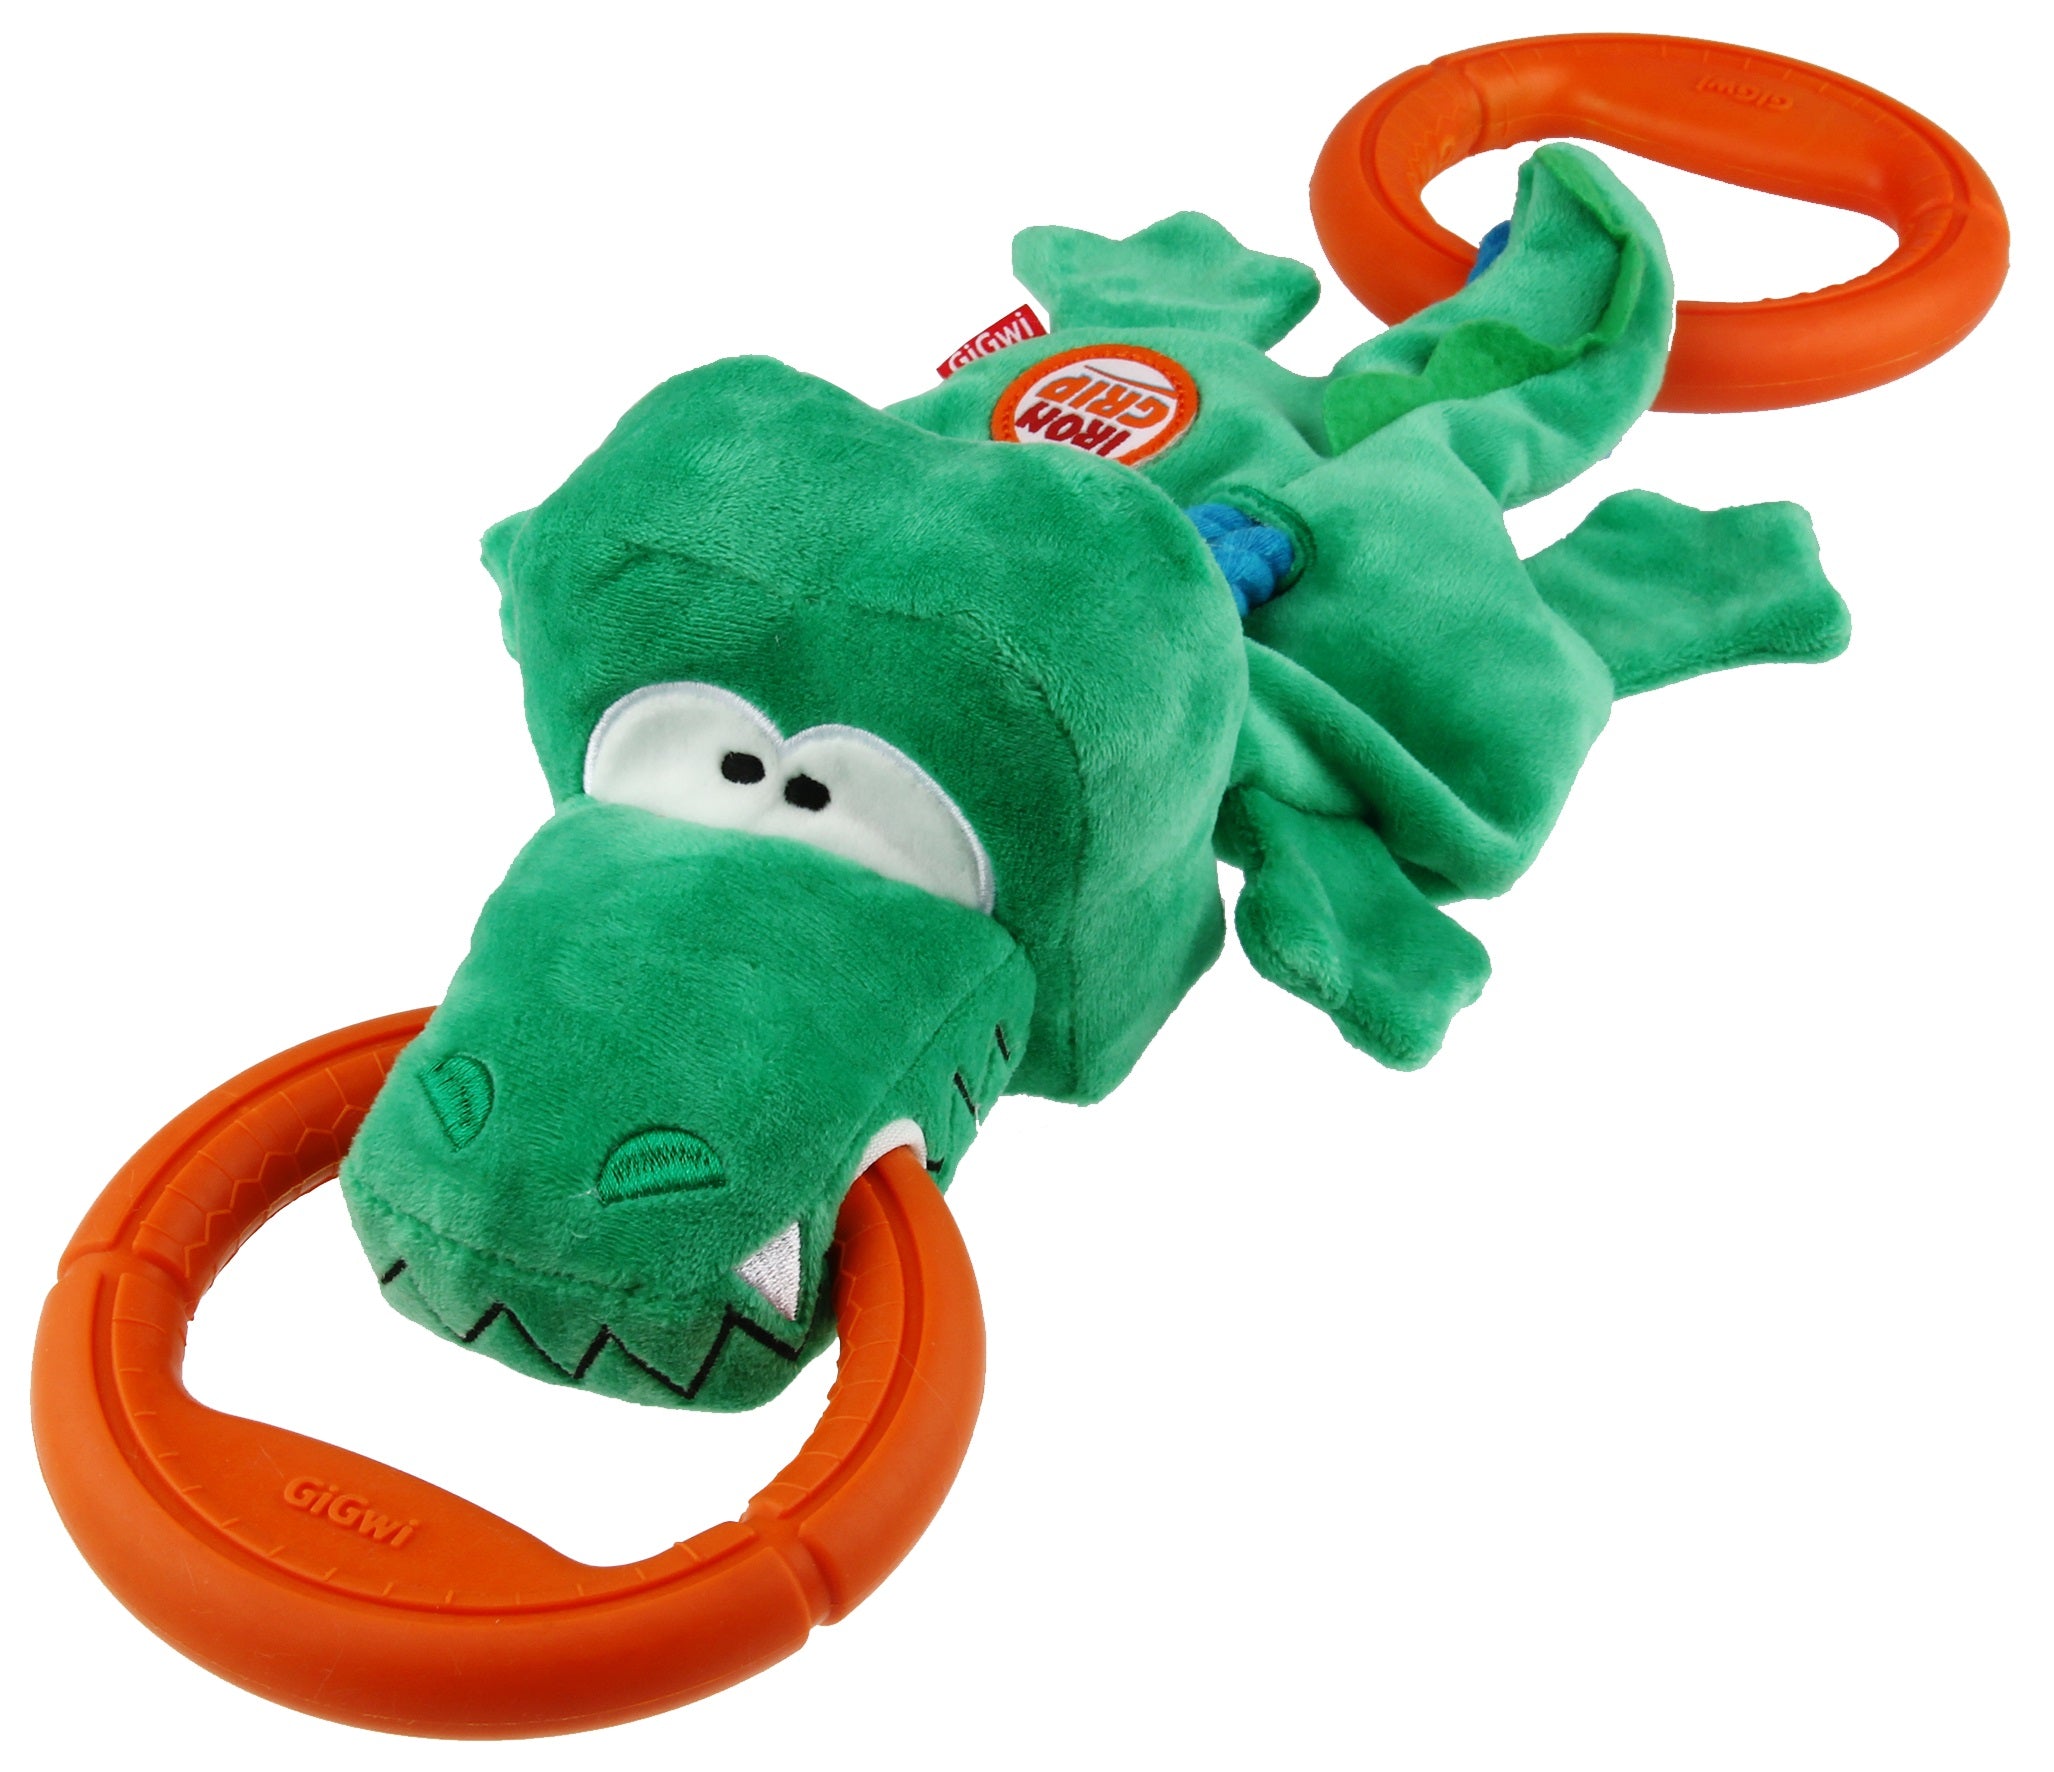 Gigwi Iron Grip Crocodile Plush Tug Toy With Tpr Handle Toy